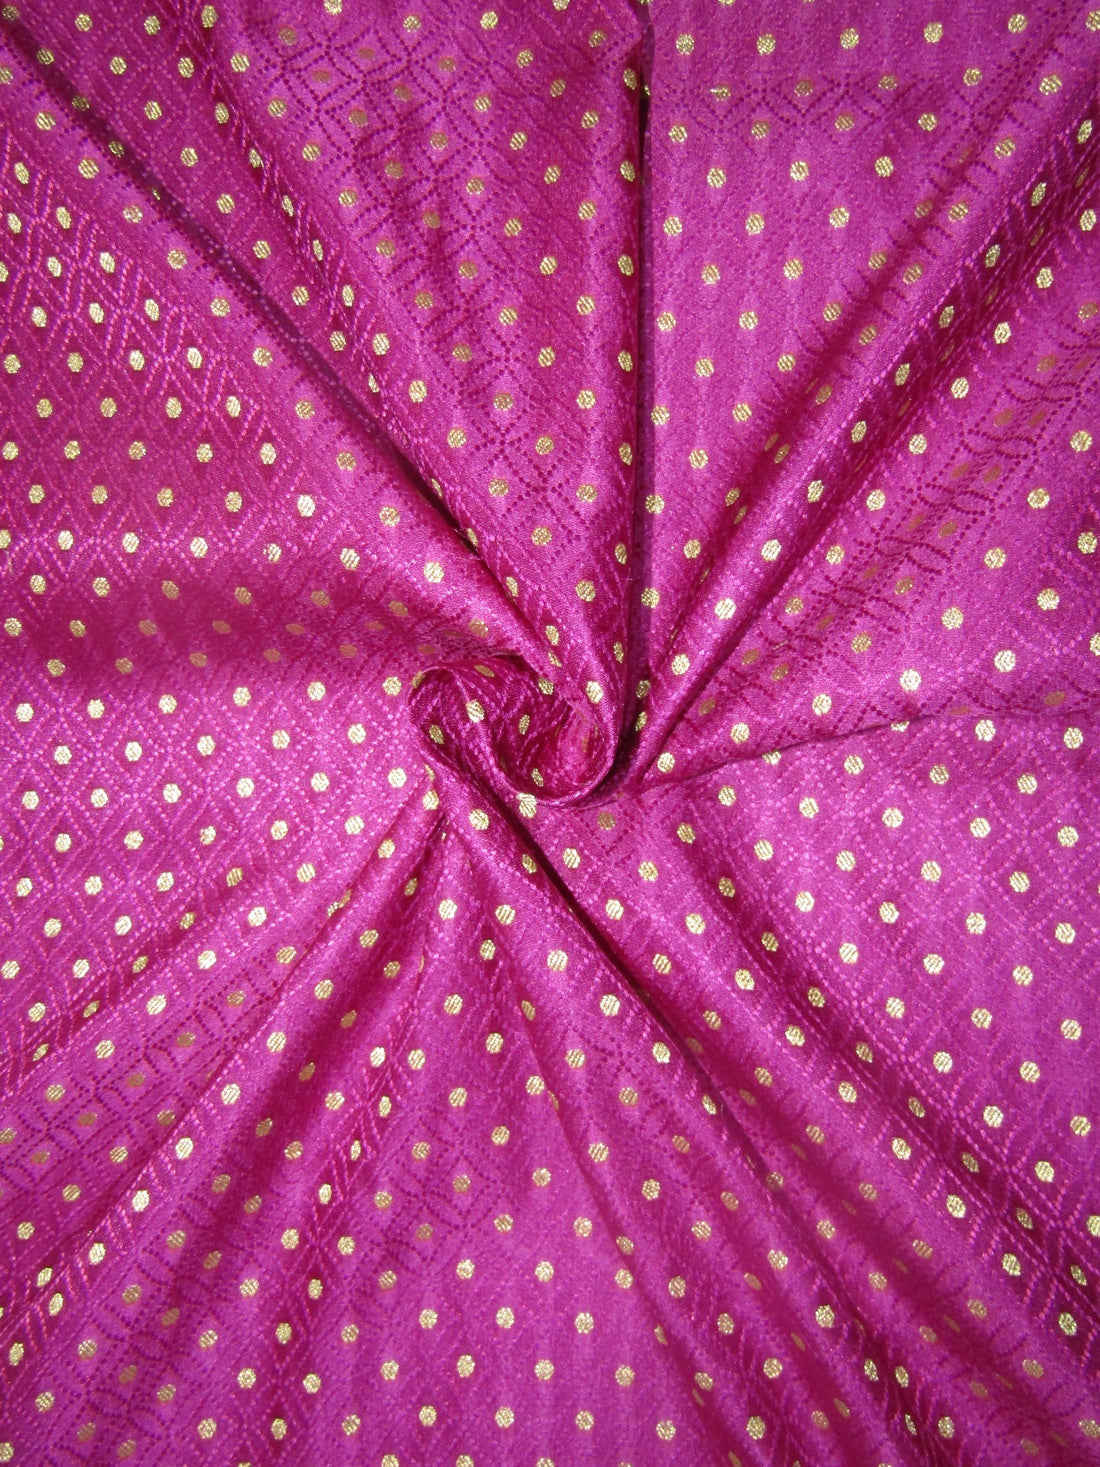 Brocade jacquard aubergine pink x metalic gold fabric 44" wide BRO688[1]